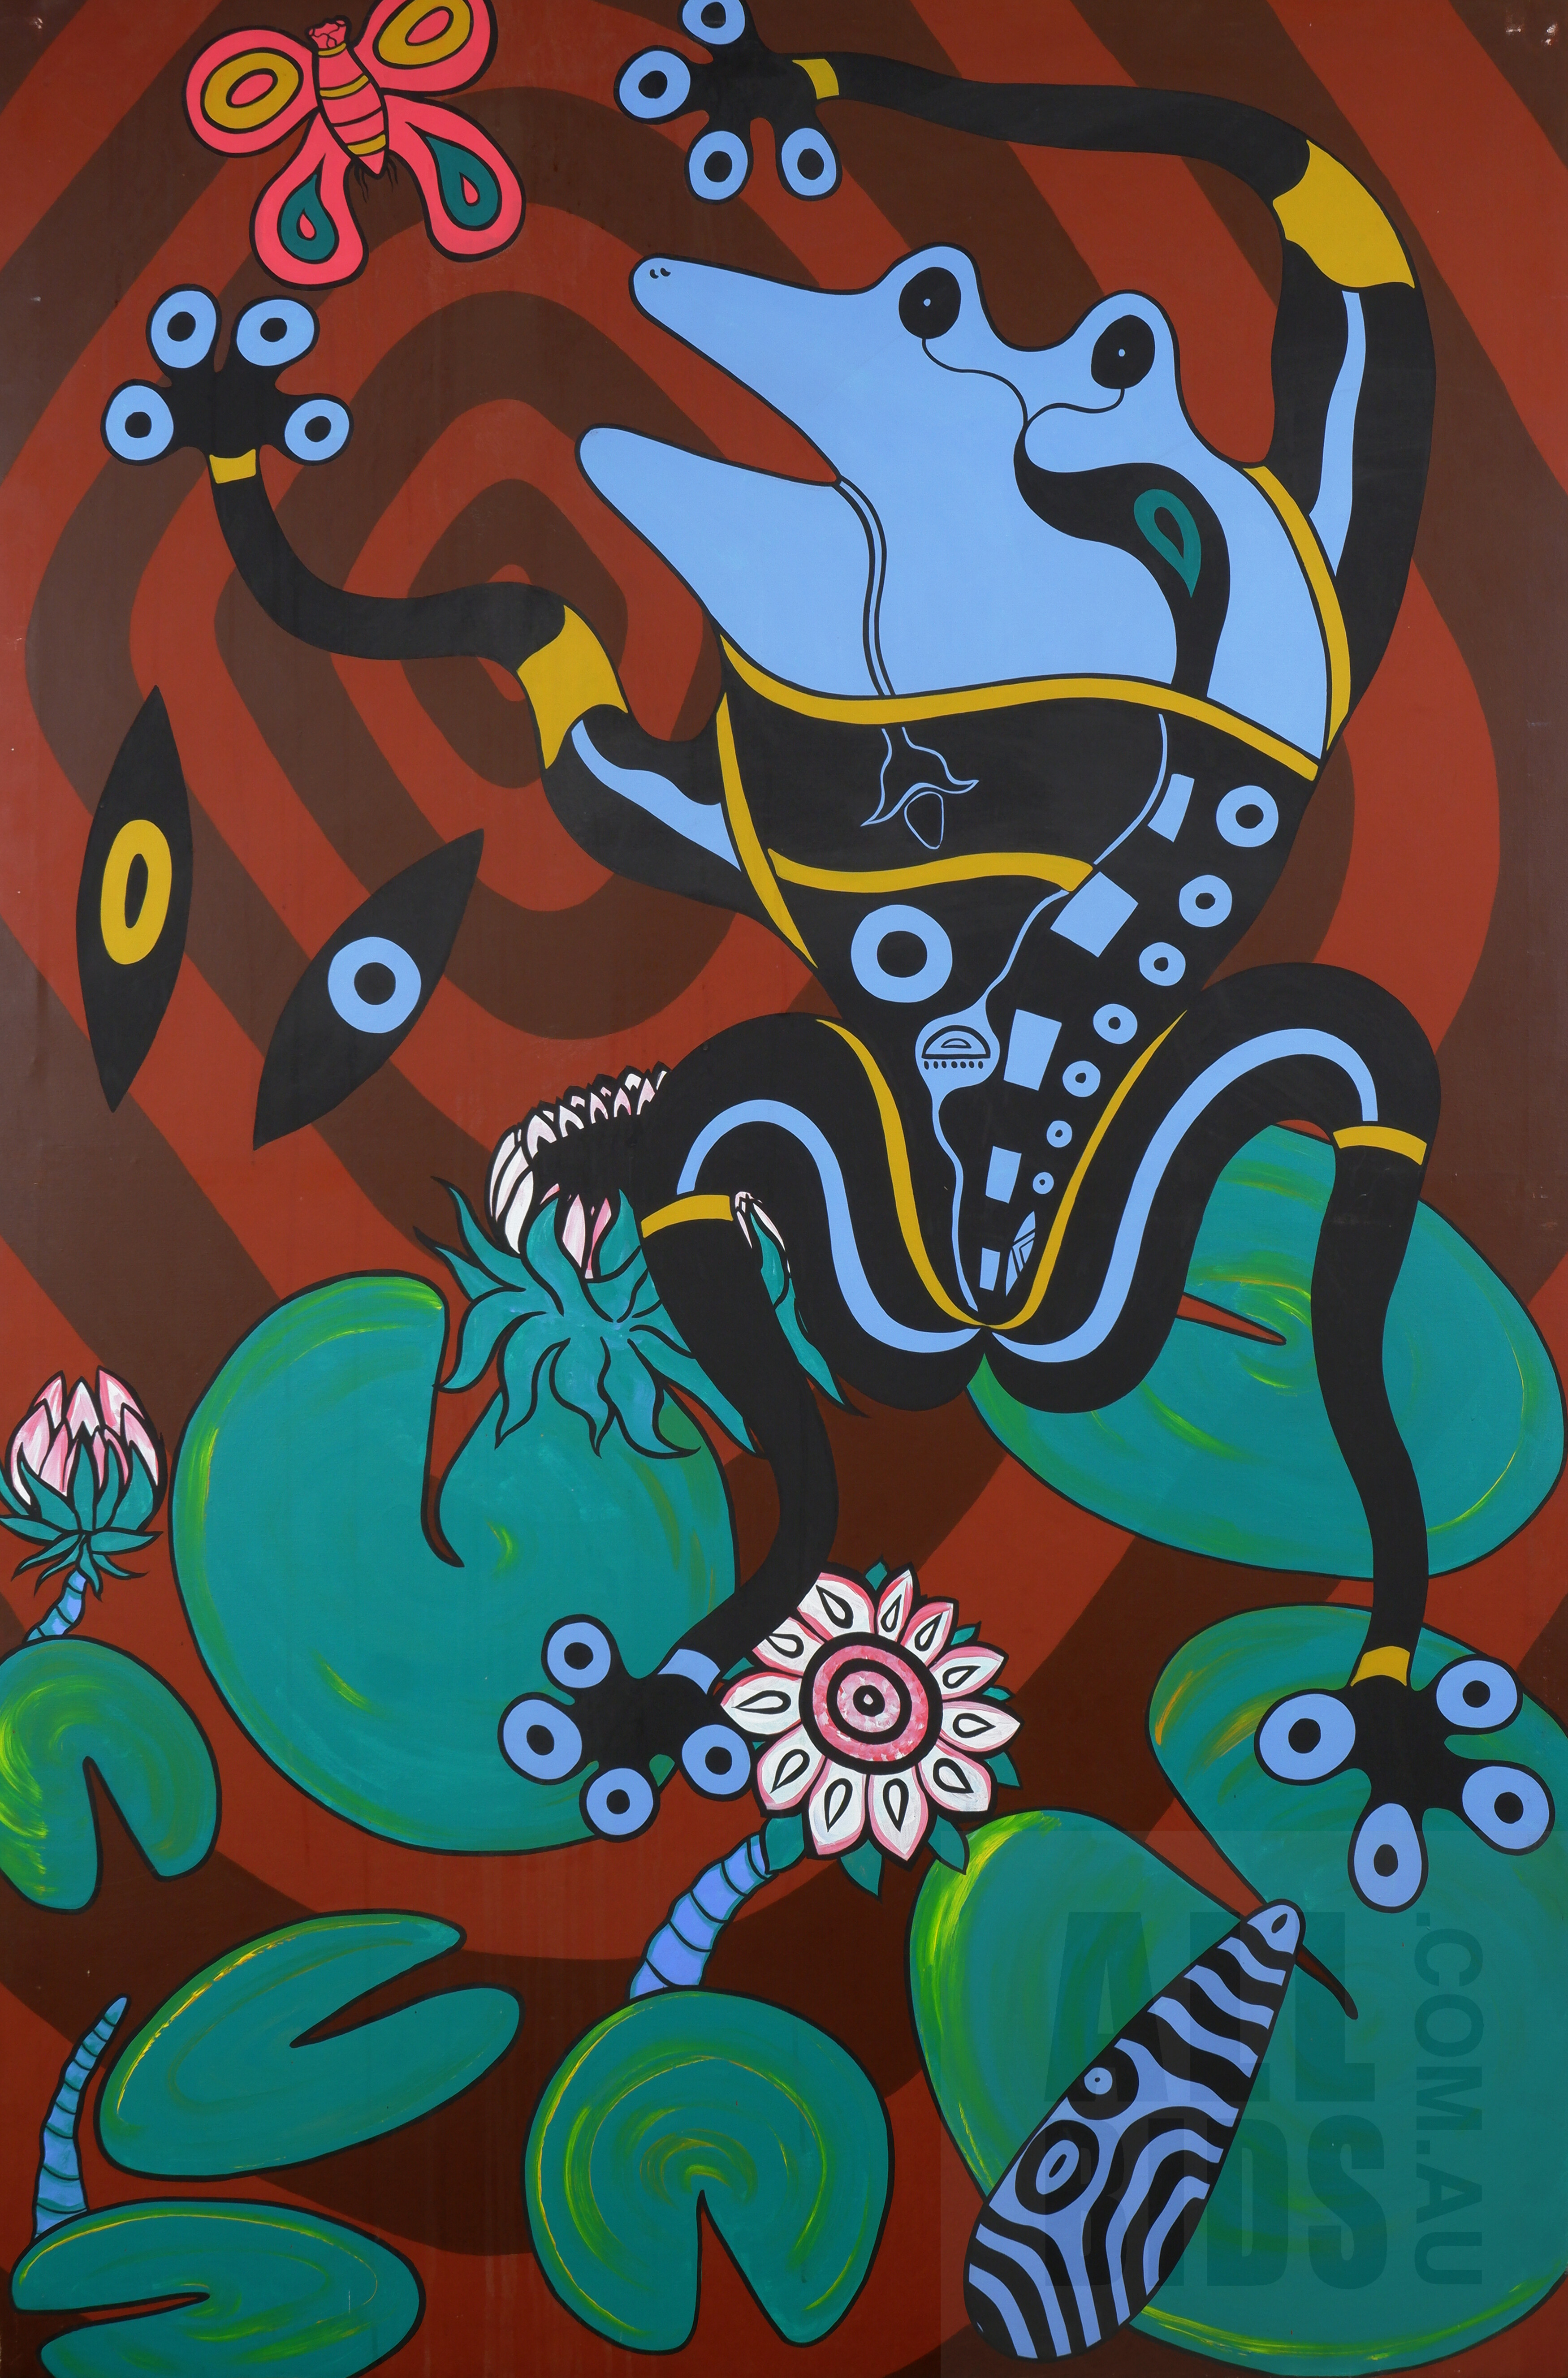 'Graham Rennie Biggibilla (born 1950), Dirwan, Acrylic on Canvas, 182 x 121 cm'